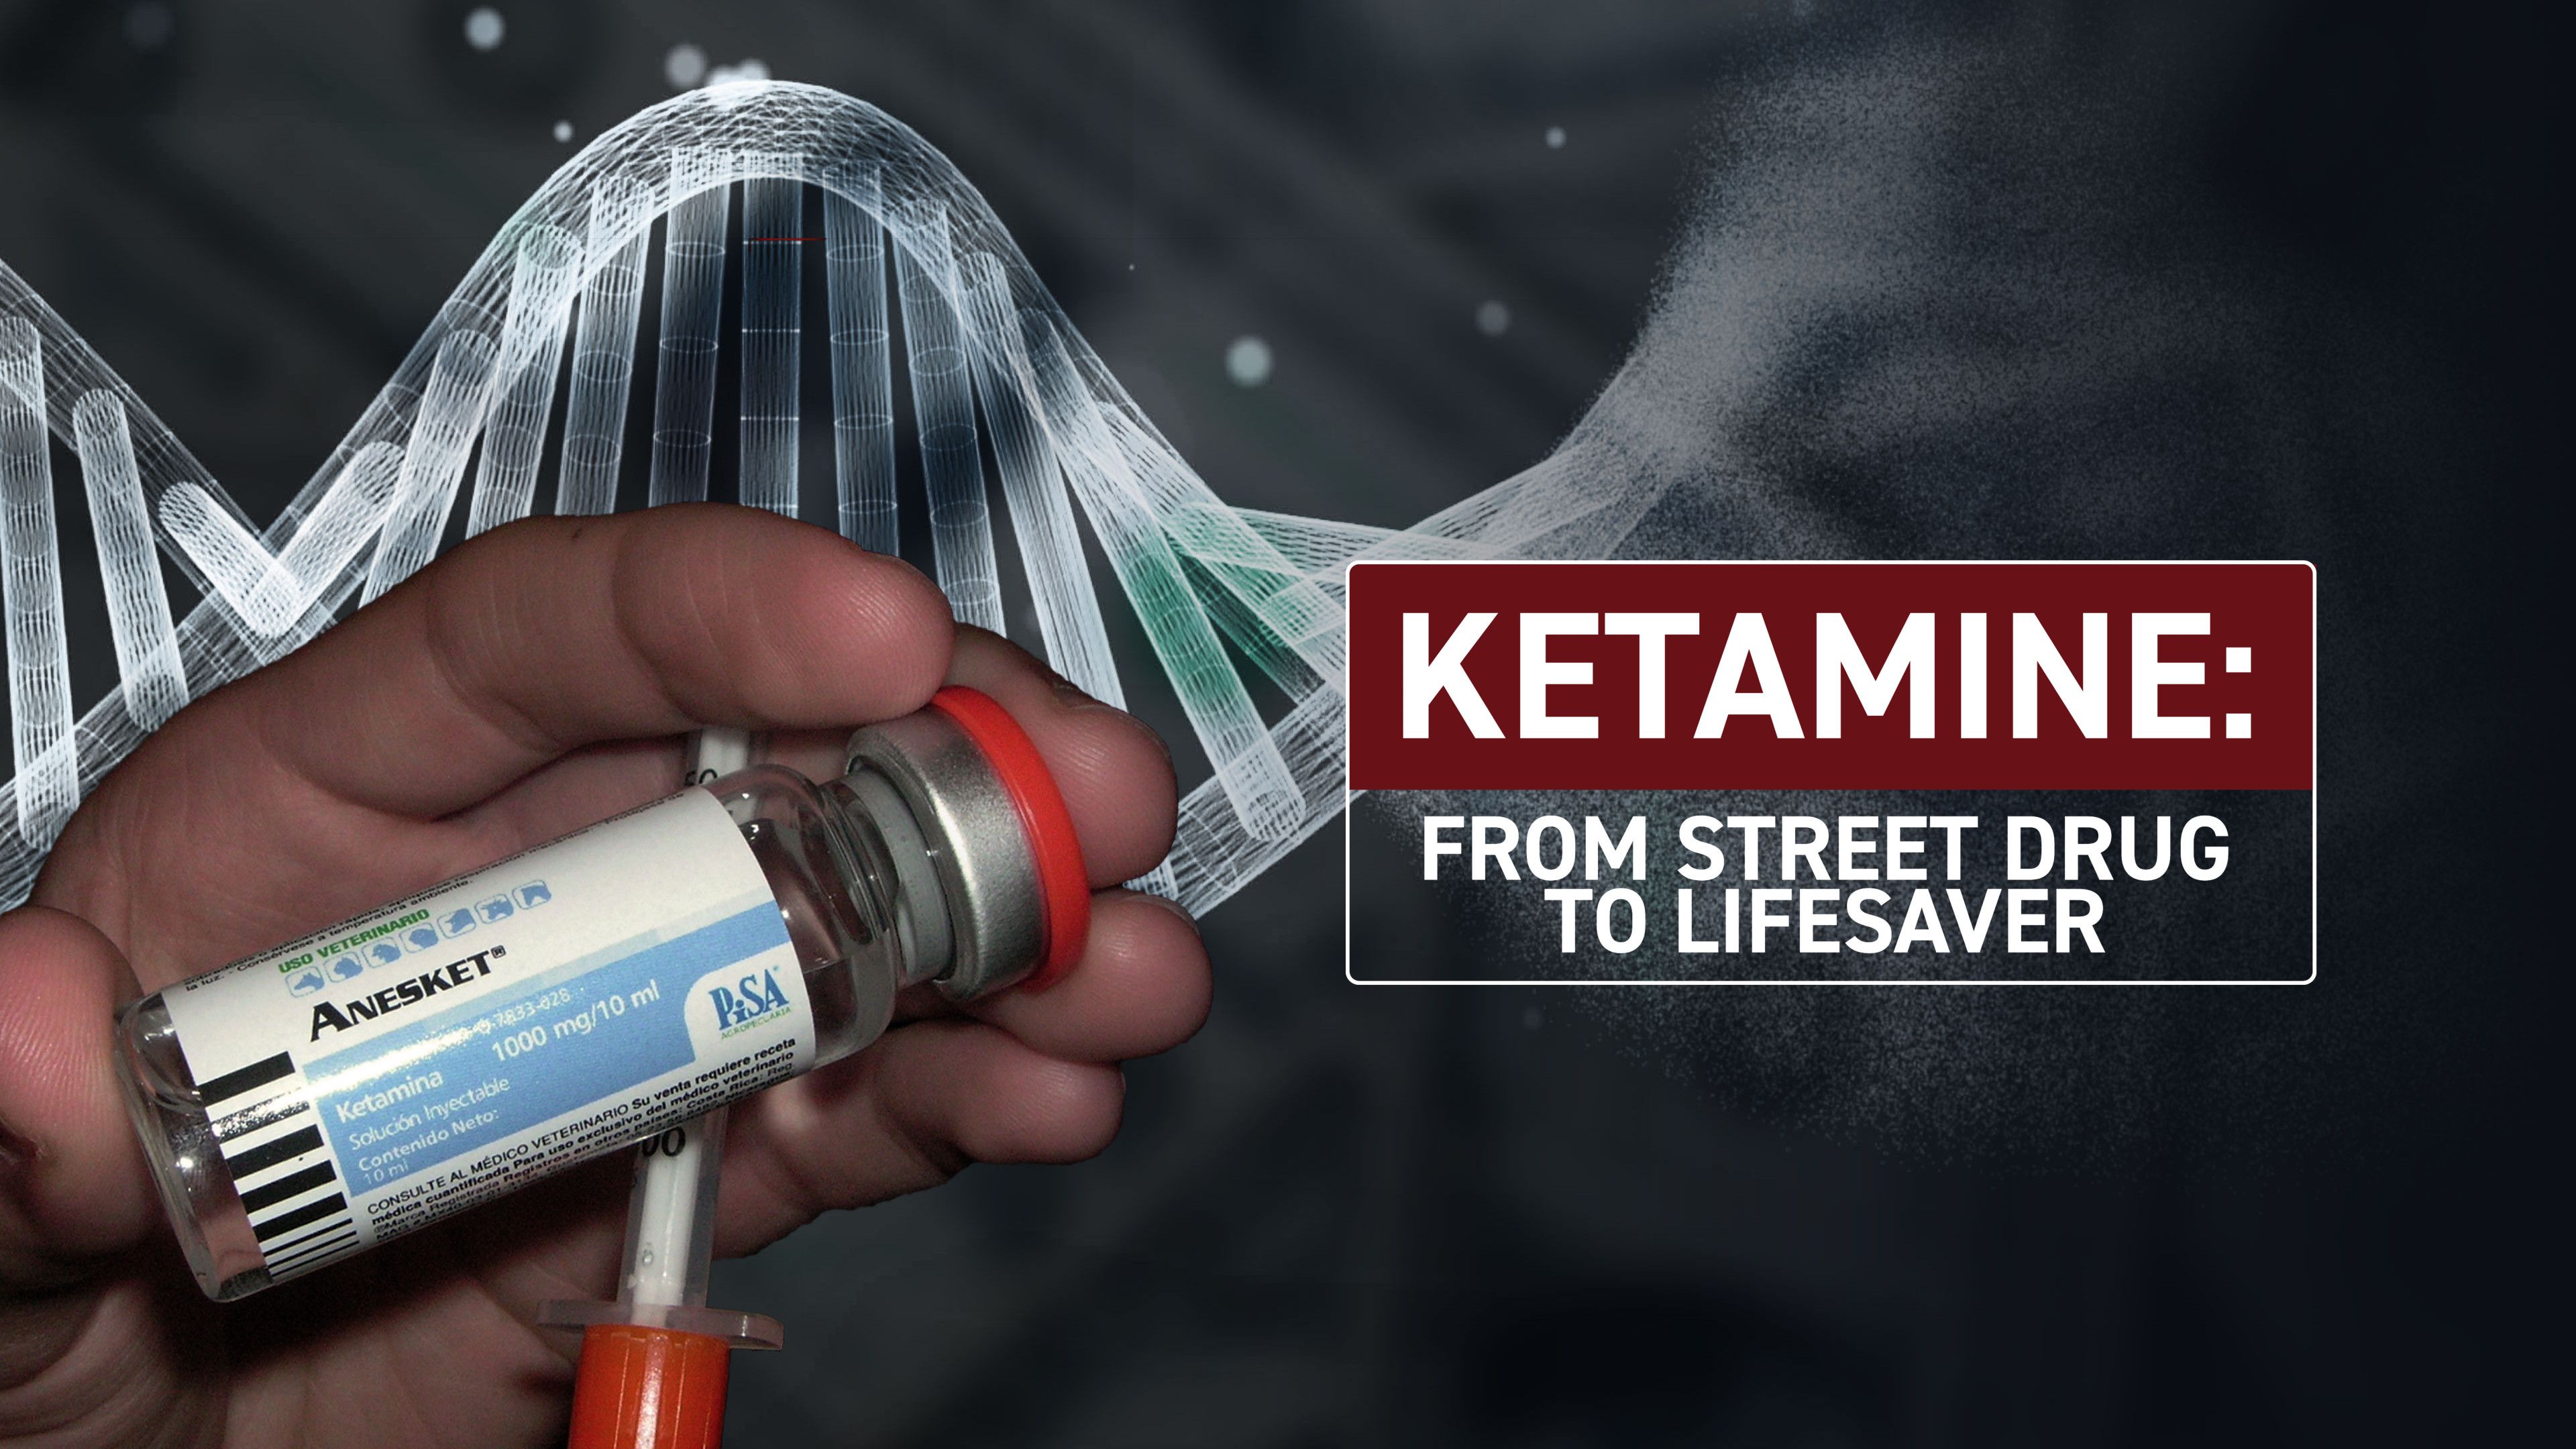 Ketamine: From Street Drug to Lifesaver